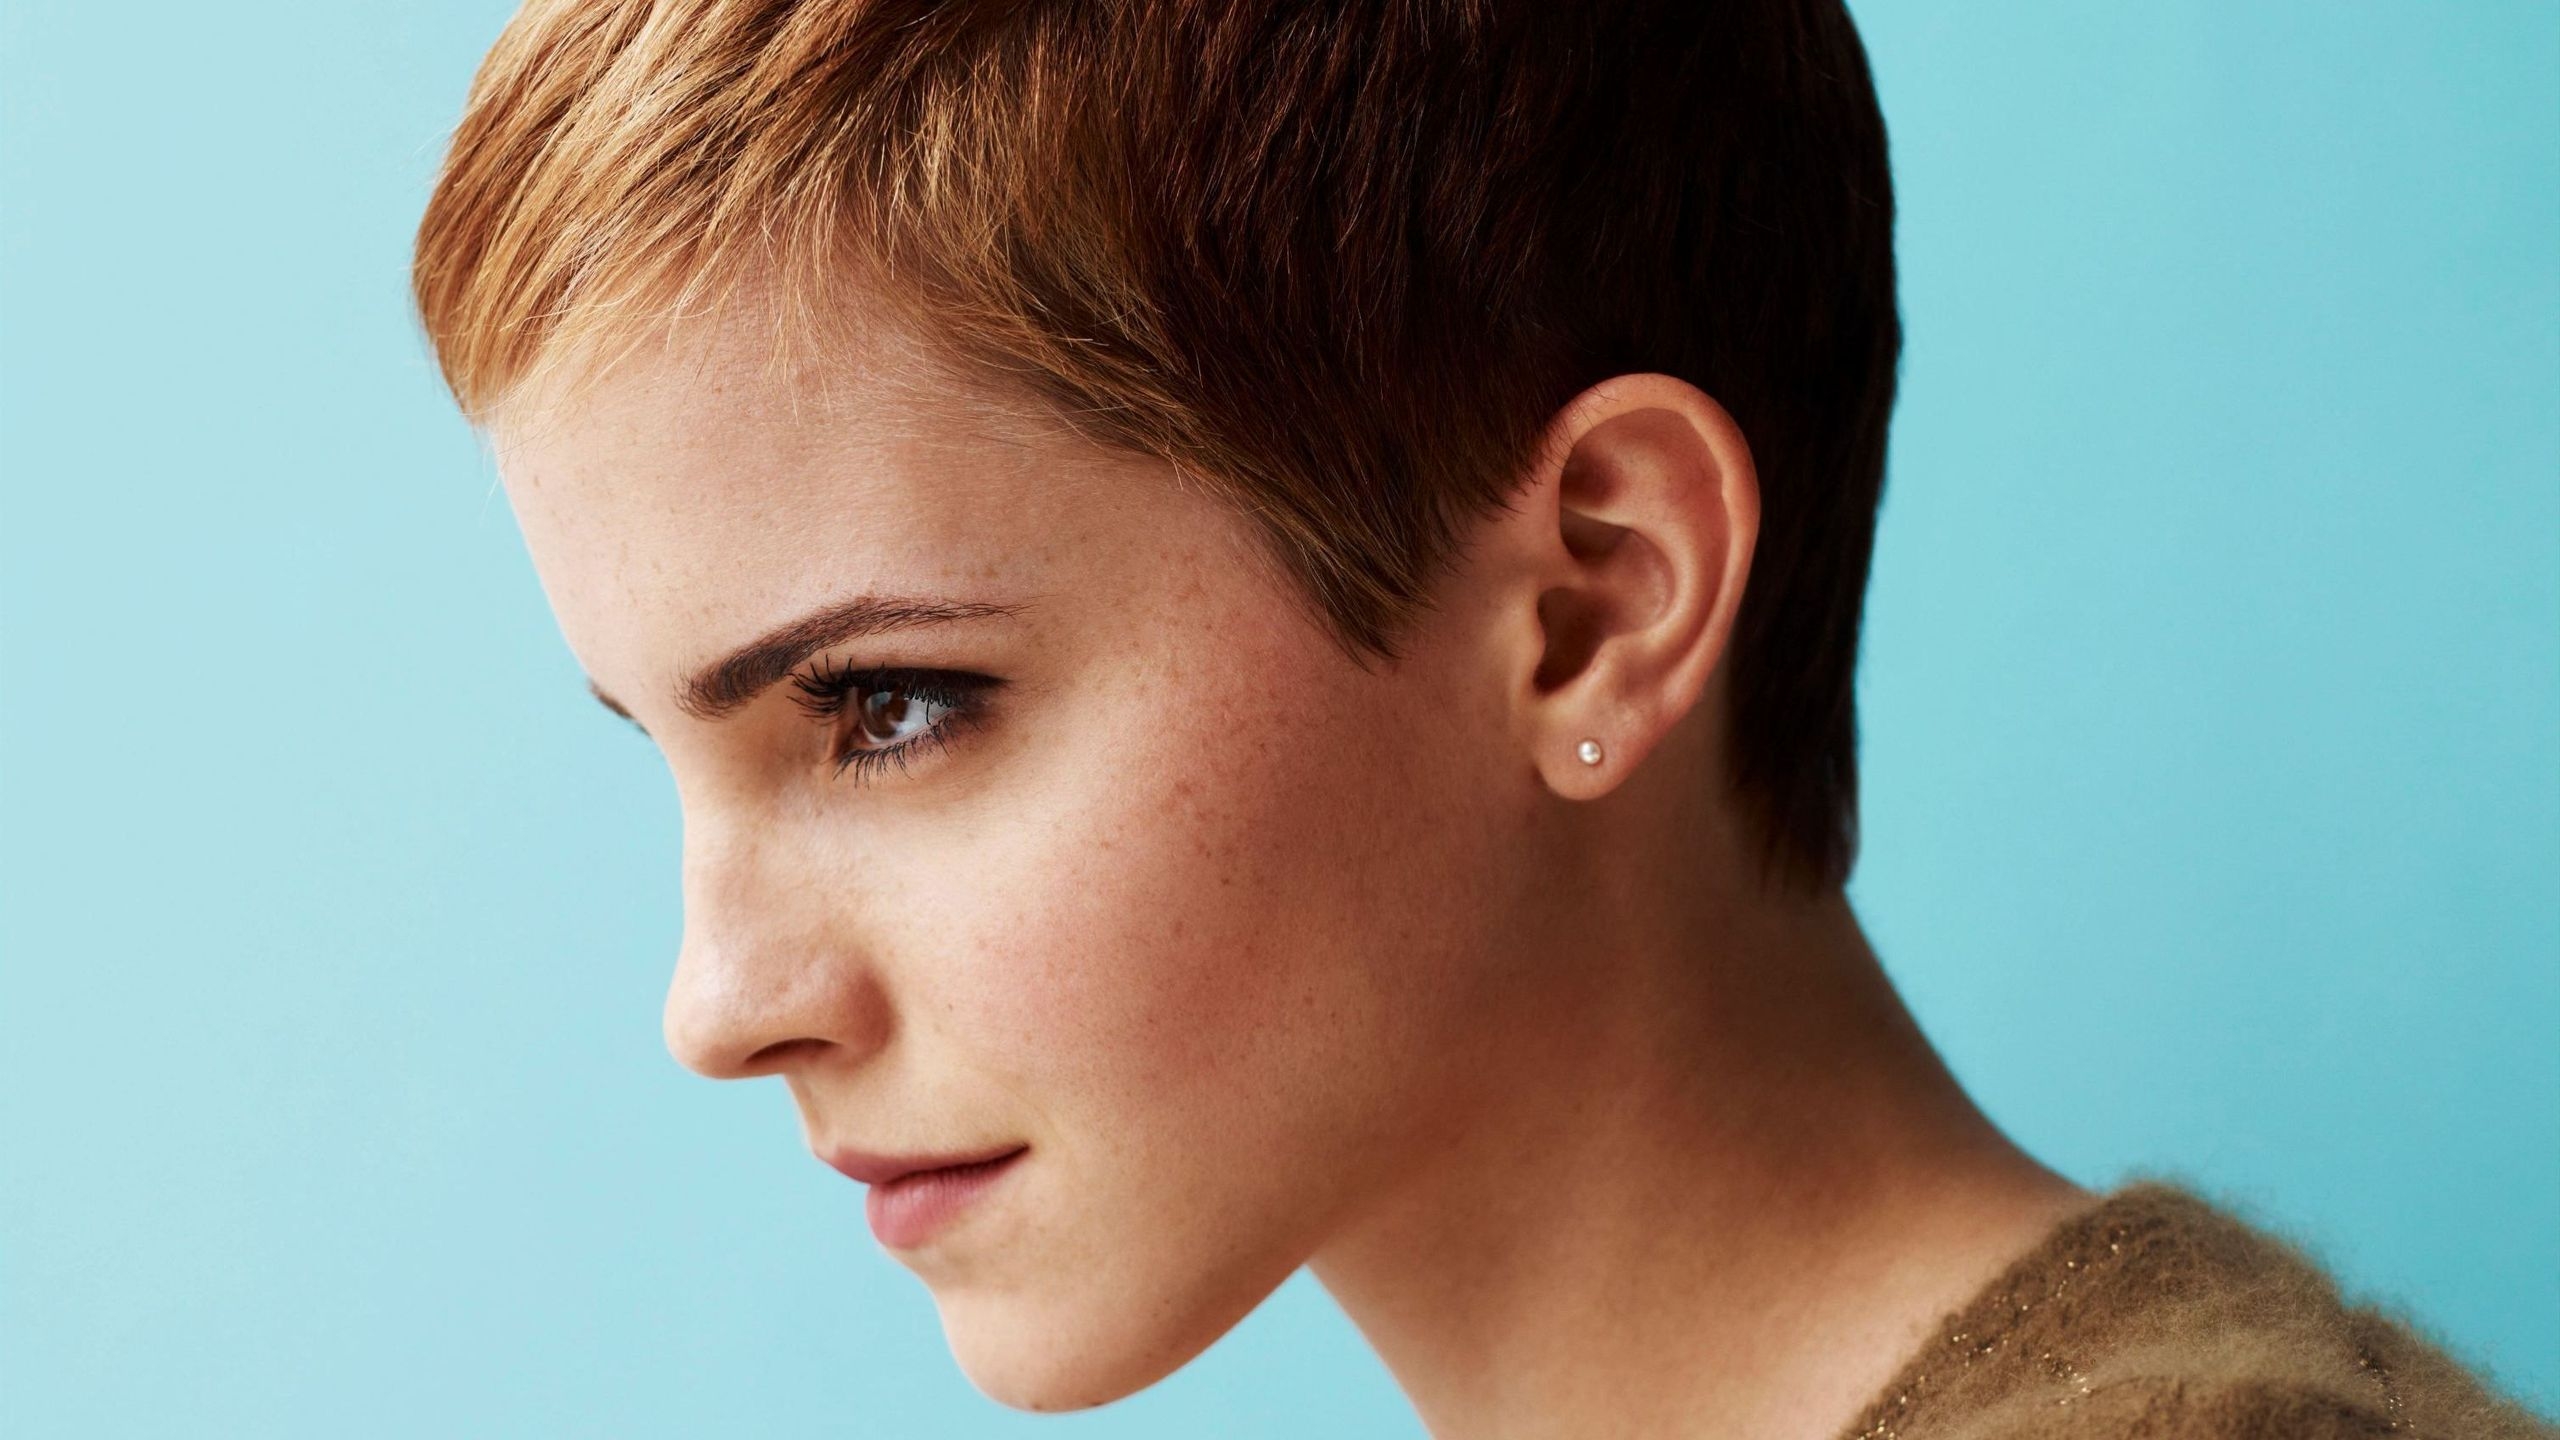 Emma Watson Short Hair for 2560x1440 HDTV resolution